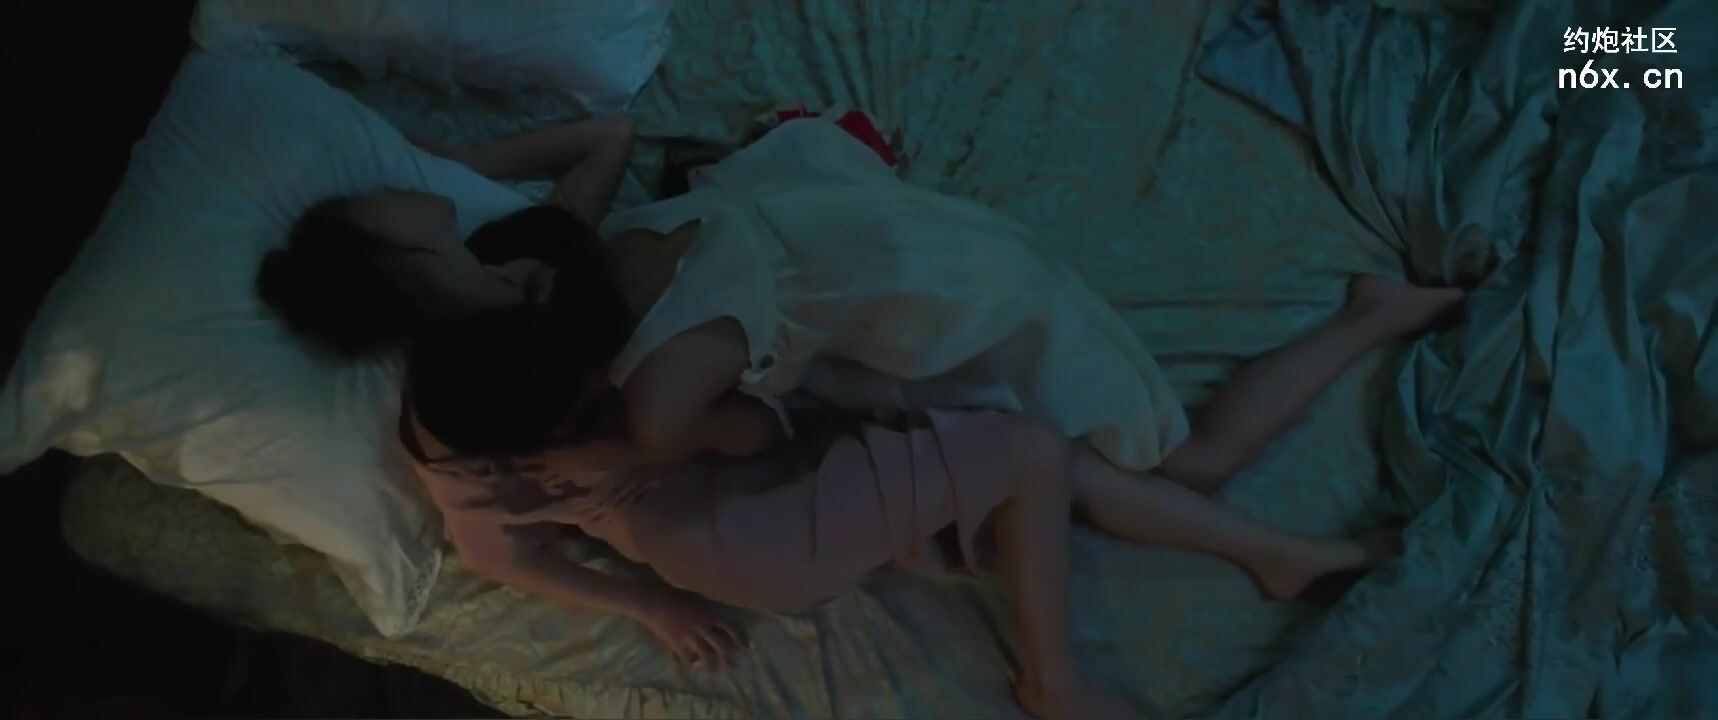 Cumming Korean movie smokin' hot Asians nude make it in a lesbian way in the night Jizz